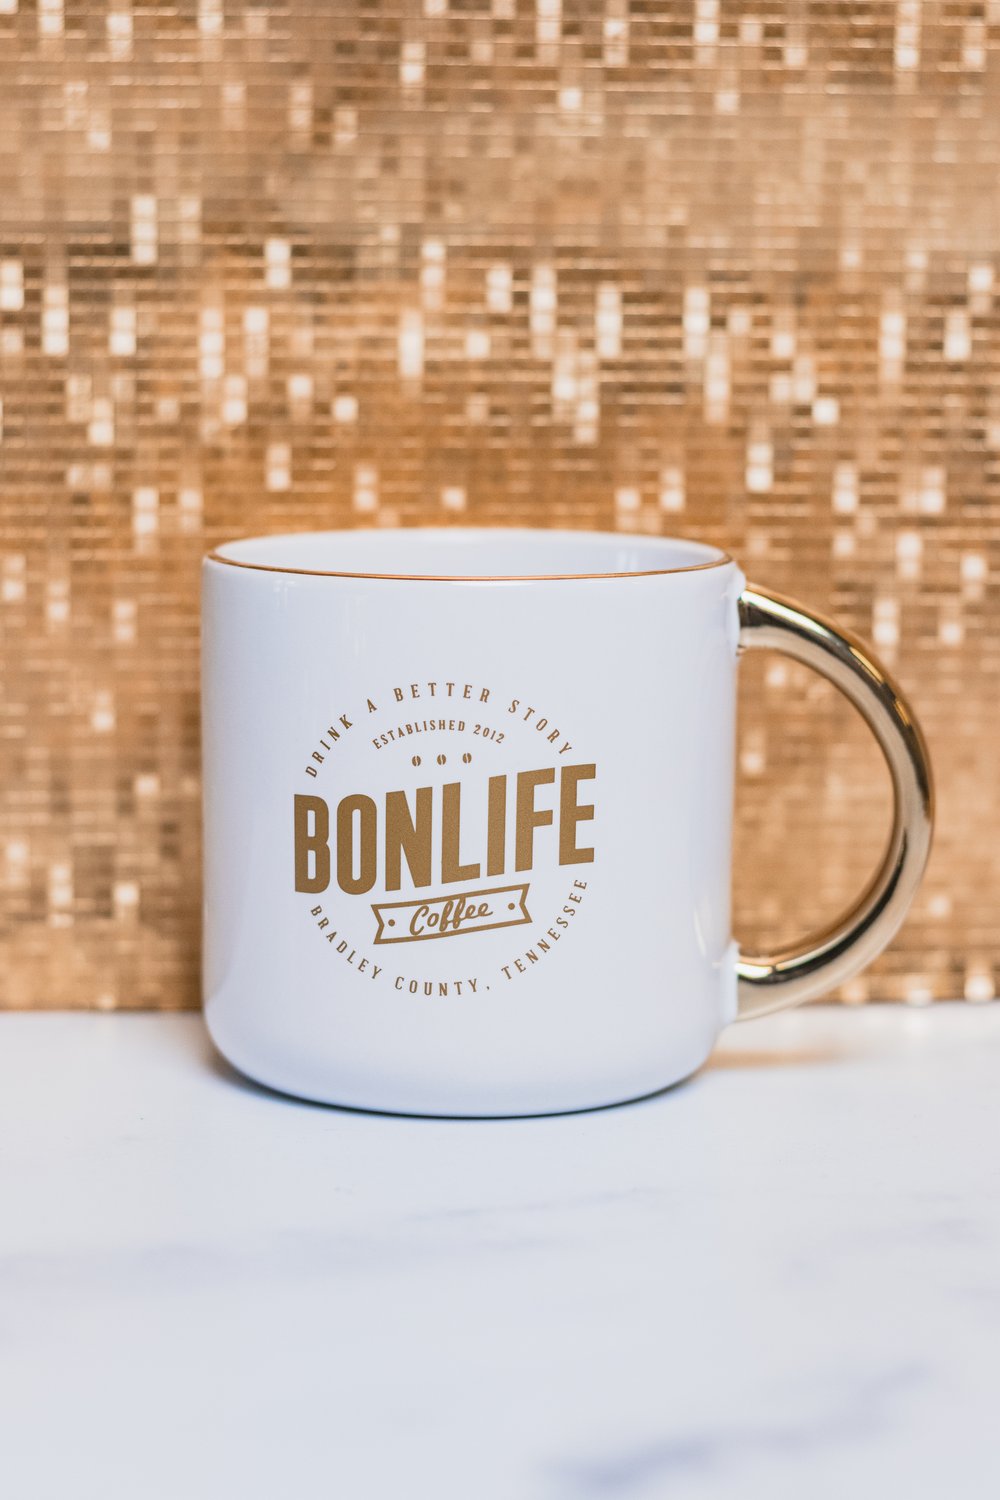 Second Life Marketplace - Fancy Decor: Bernard Coffee Mug